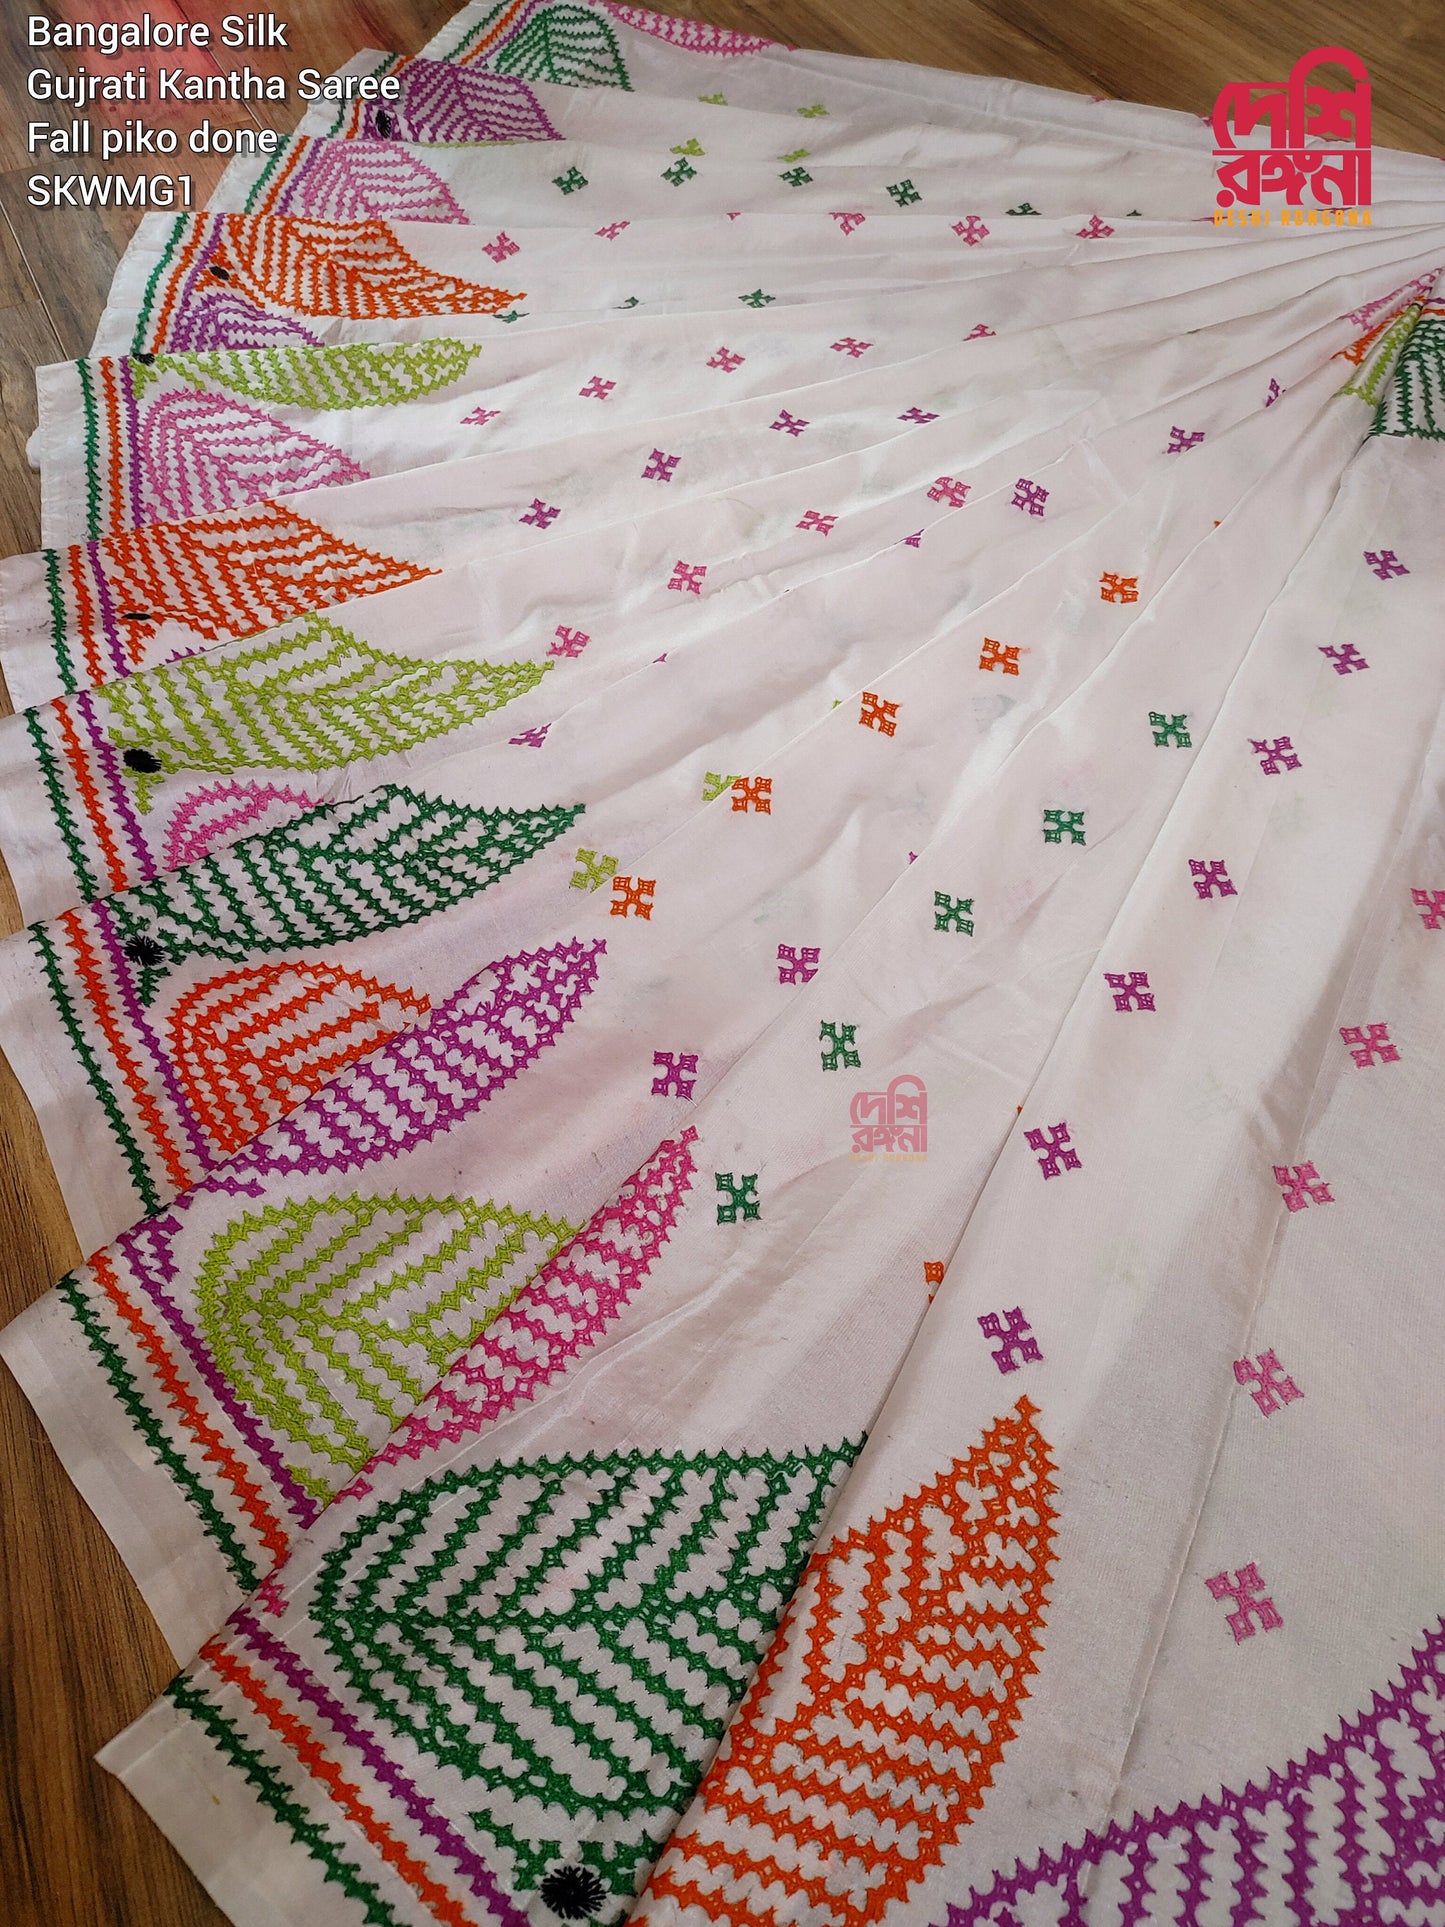 White Hand Stiched Kantha Saree, Bangalore Silk with Gorgeous Multi Gujrati Works allover, Fall/piko done, Elegant, Classy ShantiPuri Saree